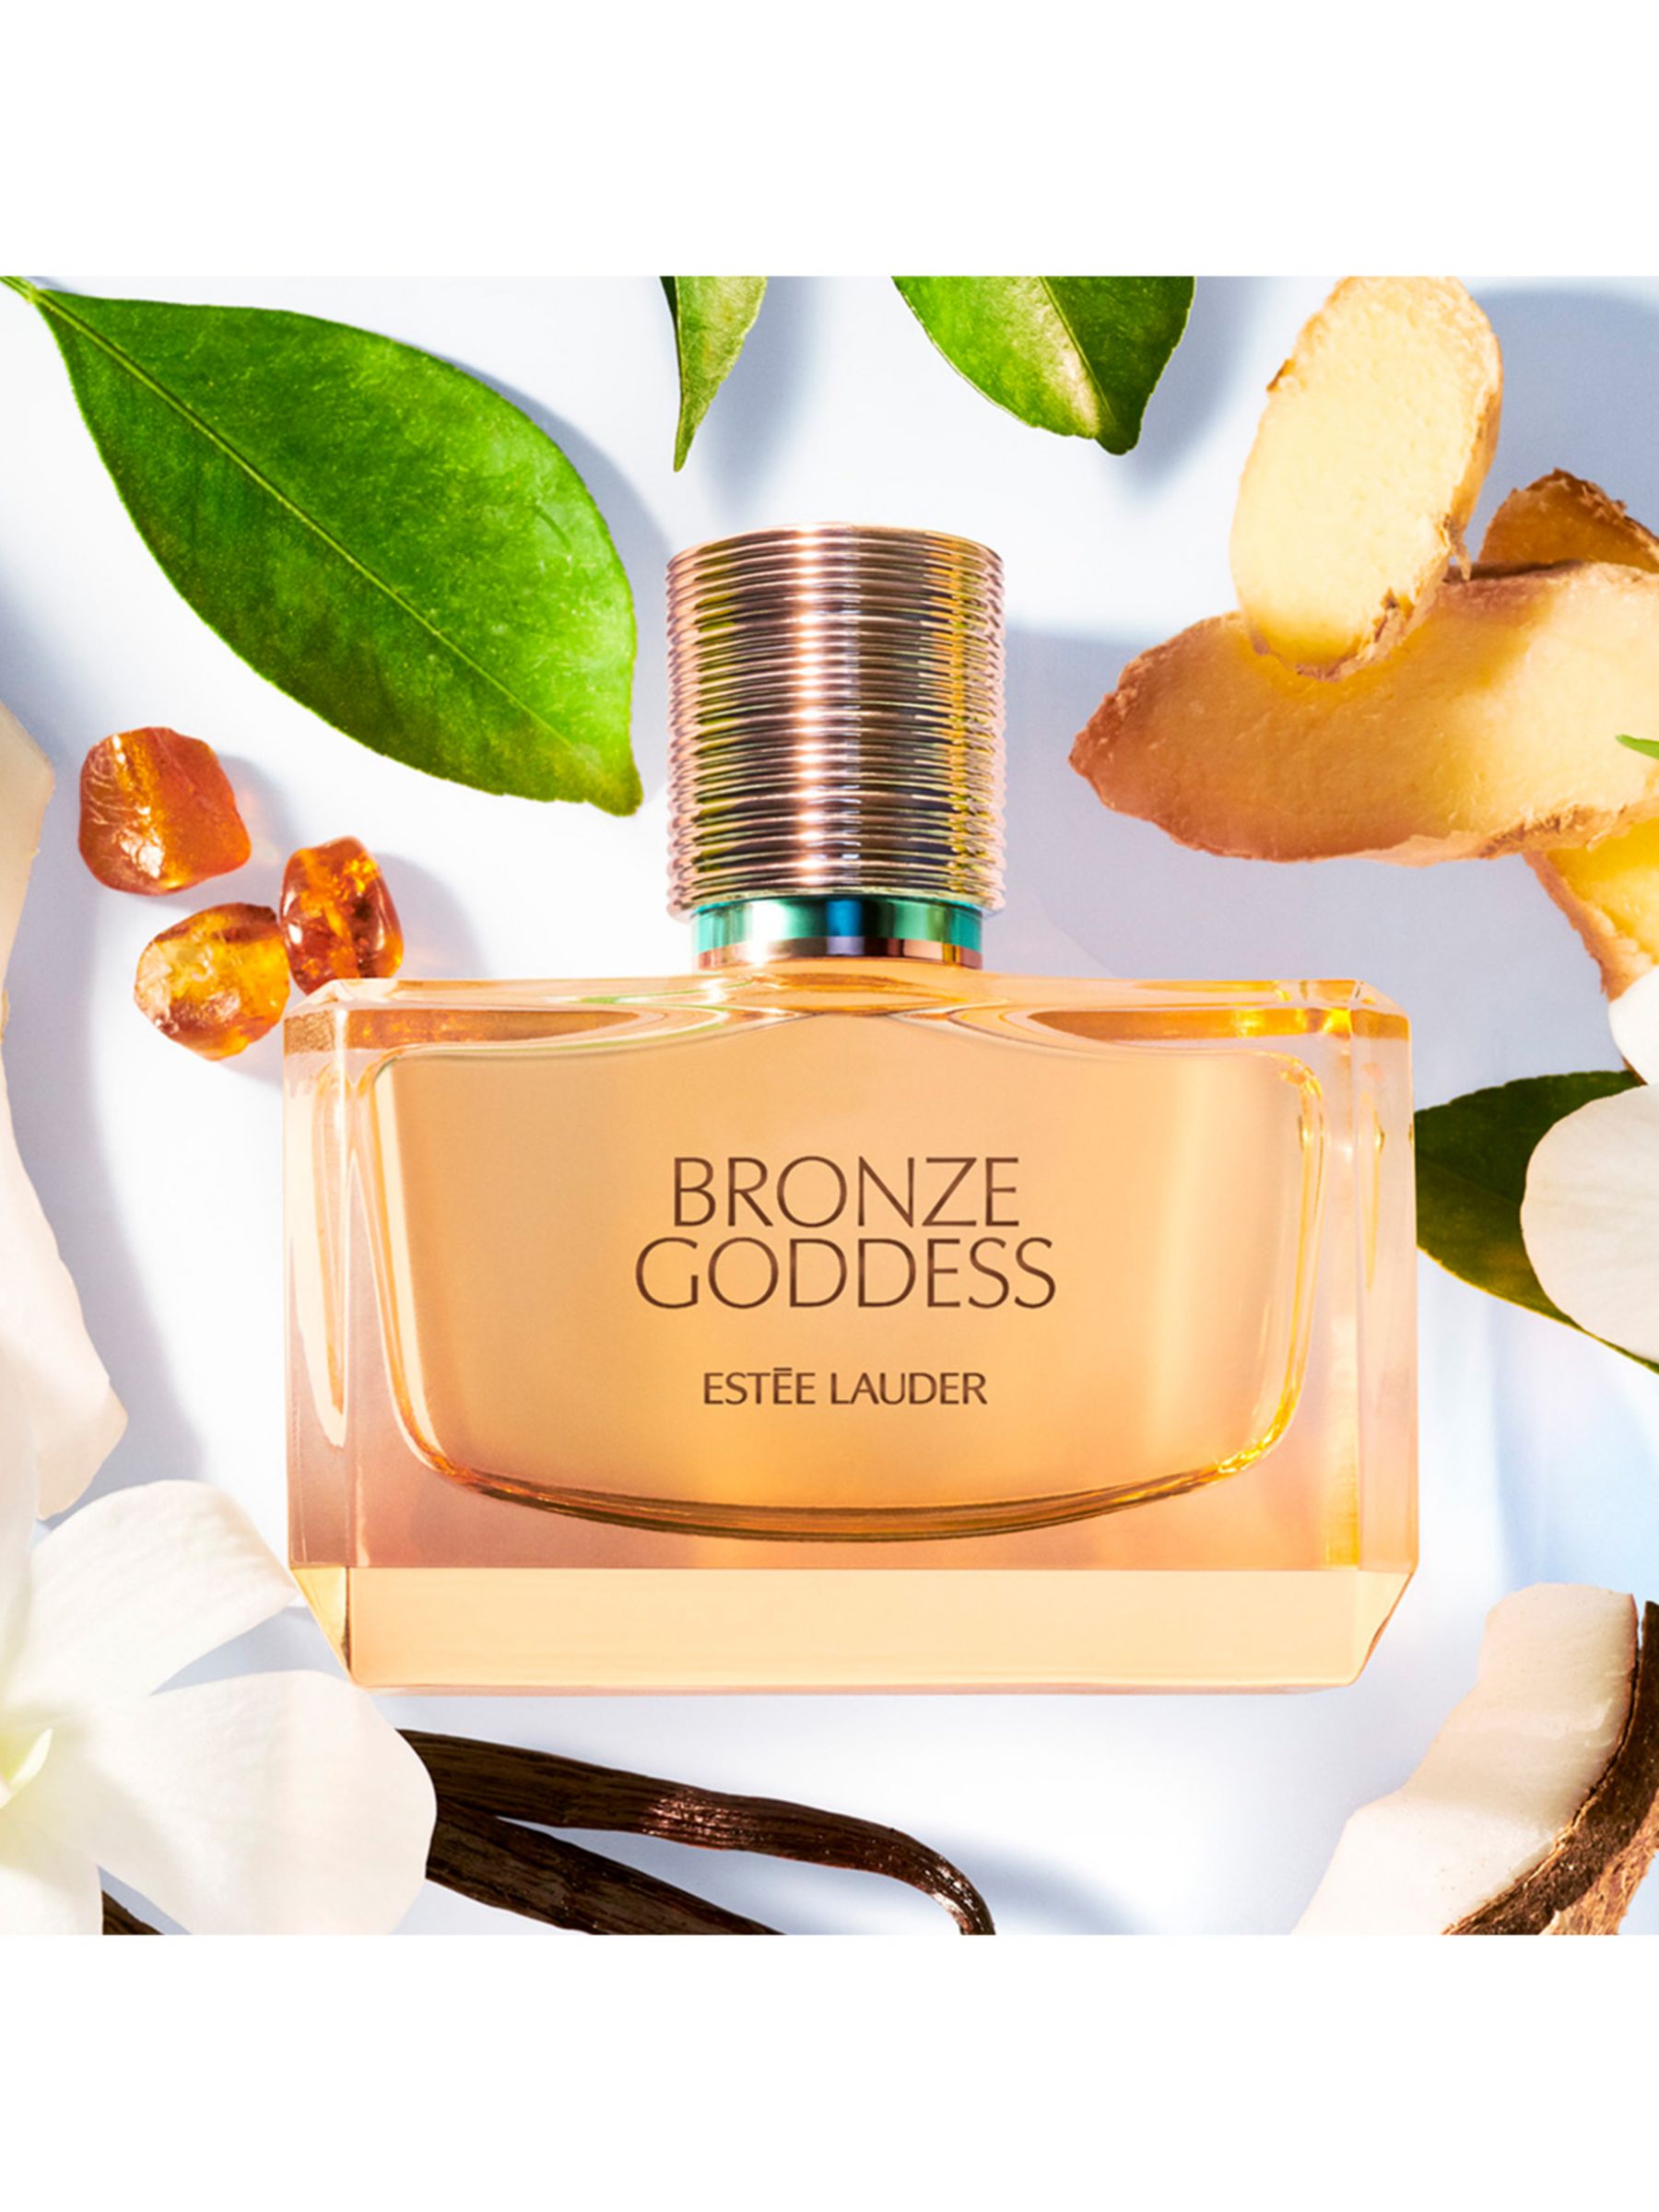 bronze goddess perfume 50ml